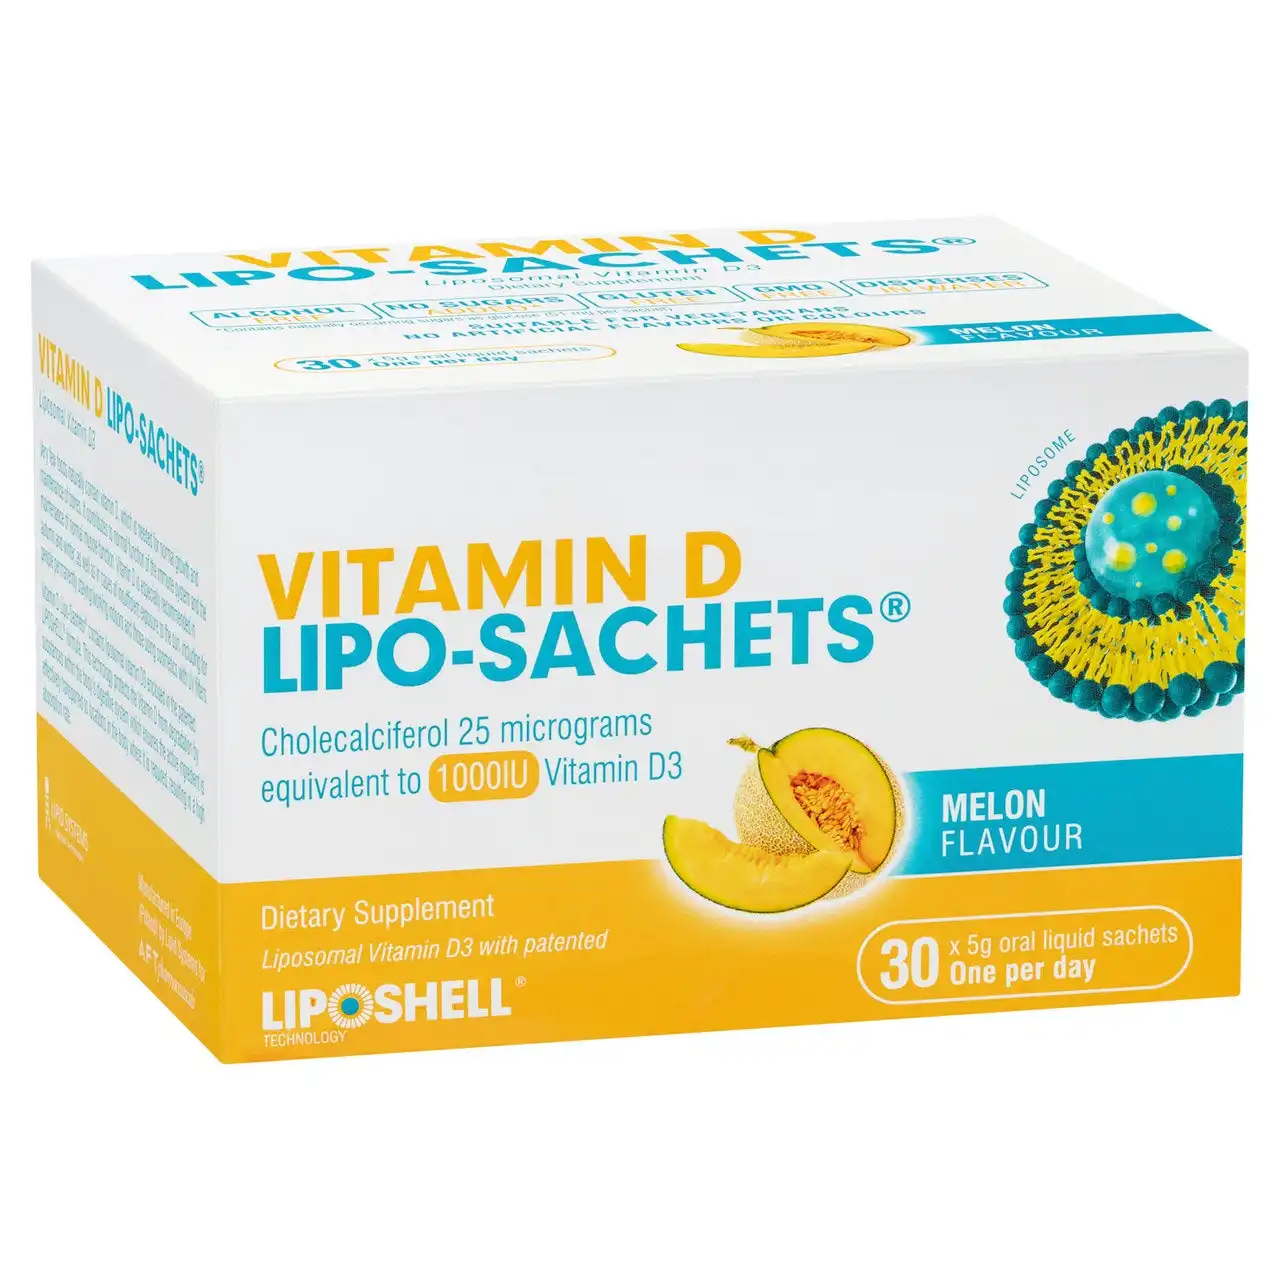 Vitamin D Lipo-Sachets(R) Melon Flavour 30 Sachets x 5g